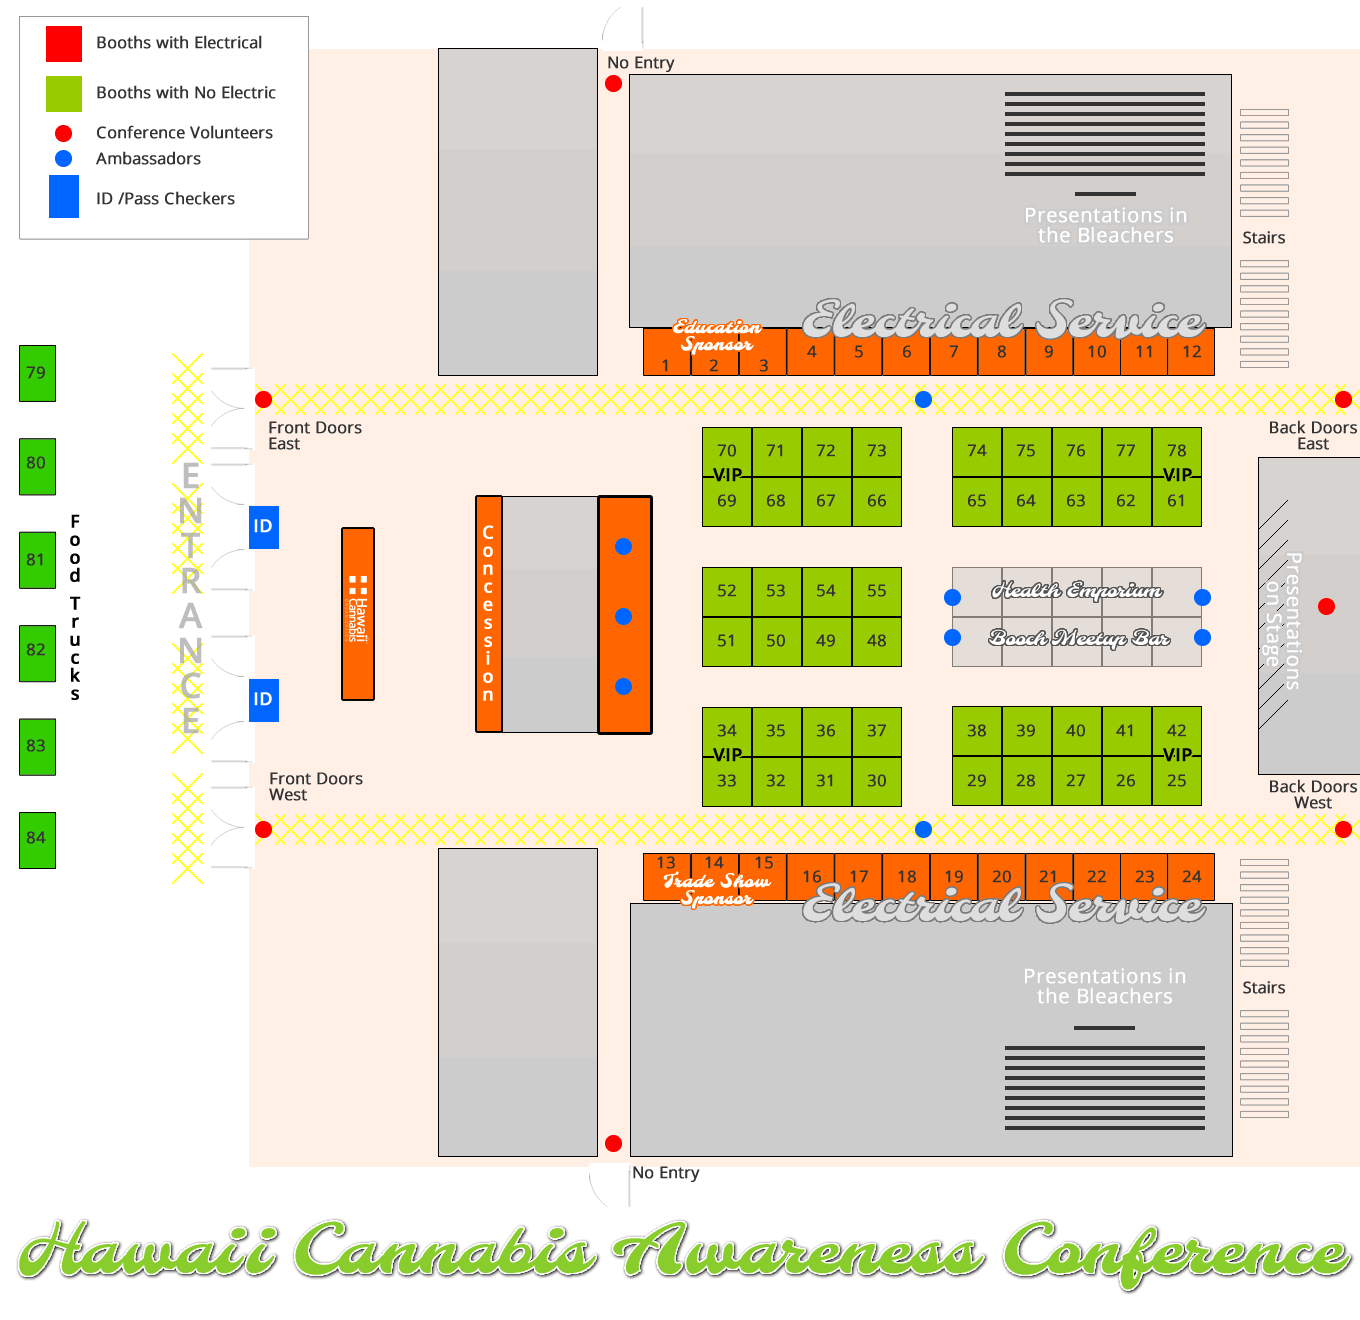 Hilo Civic Center Floor Plan - Afook Chinen Civic Auditorium